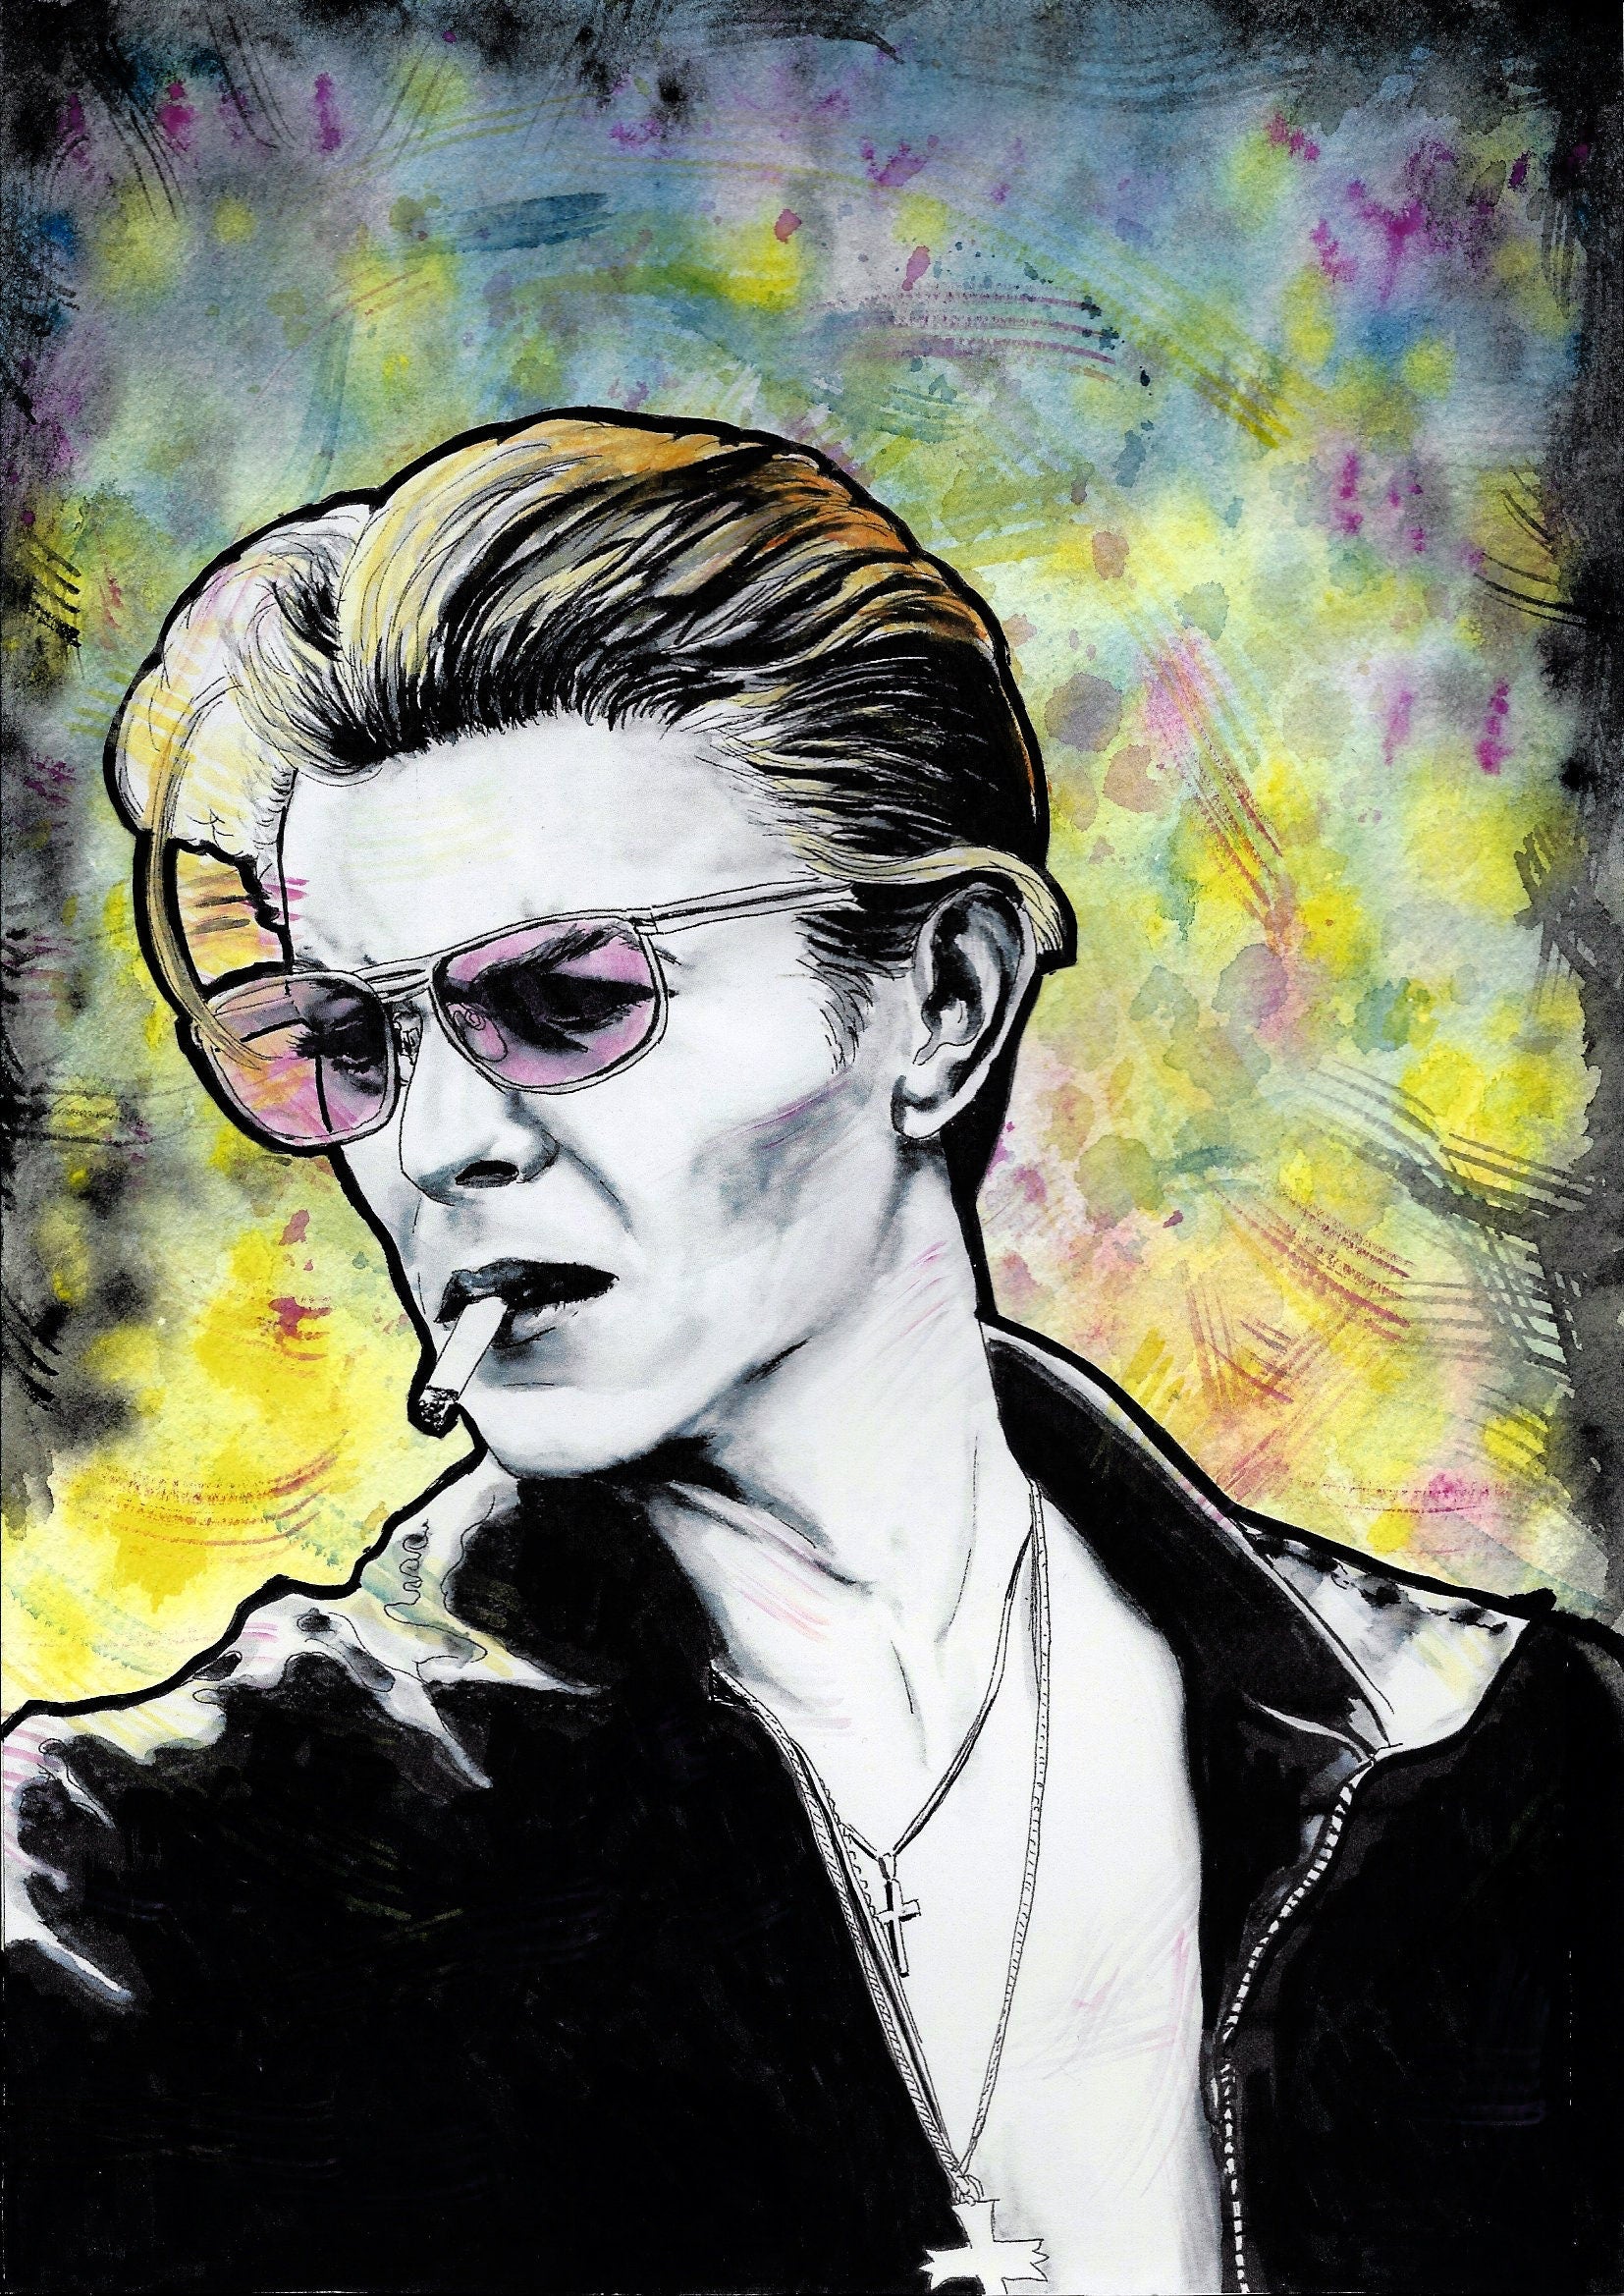 David Bowie greeting card, David Bowie fan gift, Birthday Card, Pop art card, Music legends card, Rock music card, Bowie birthday card